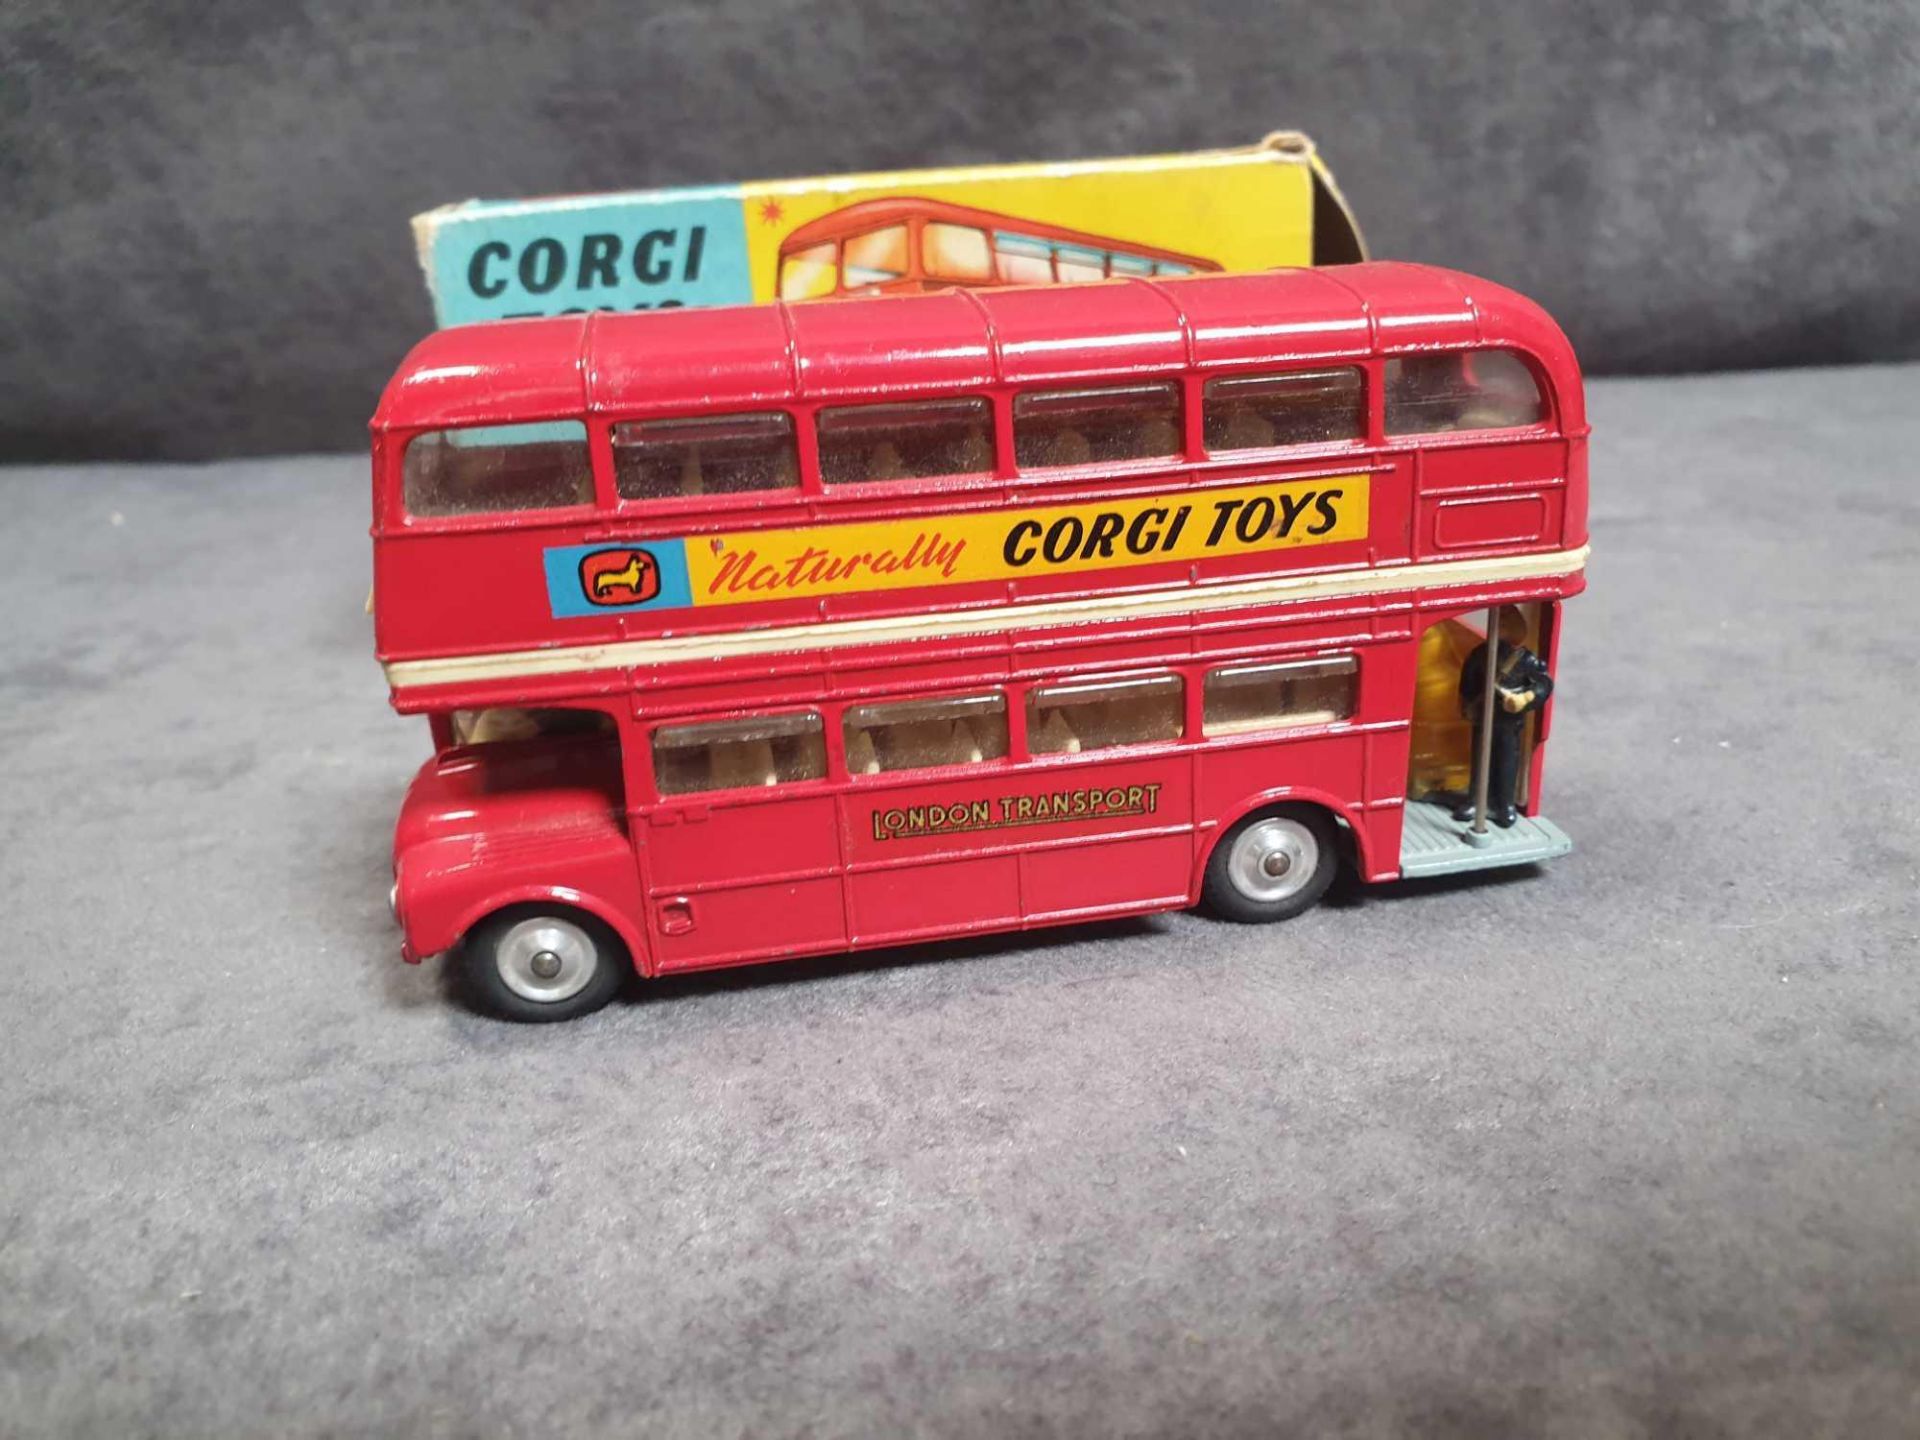 Corgi Diecast #468 London Transport routemaster bus with box 1969-1974 - Image 2 of 4